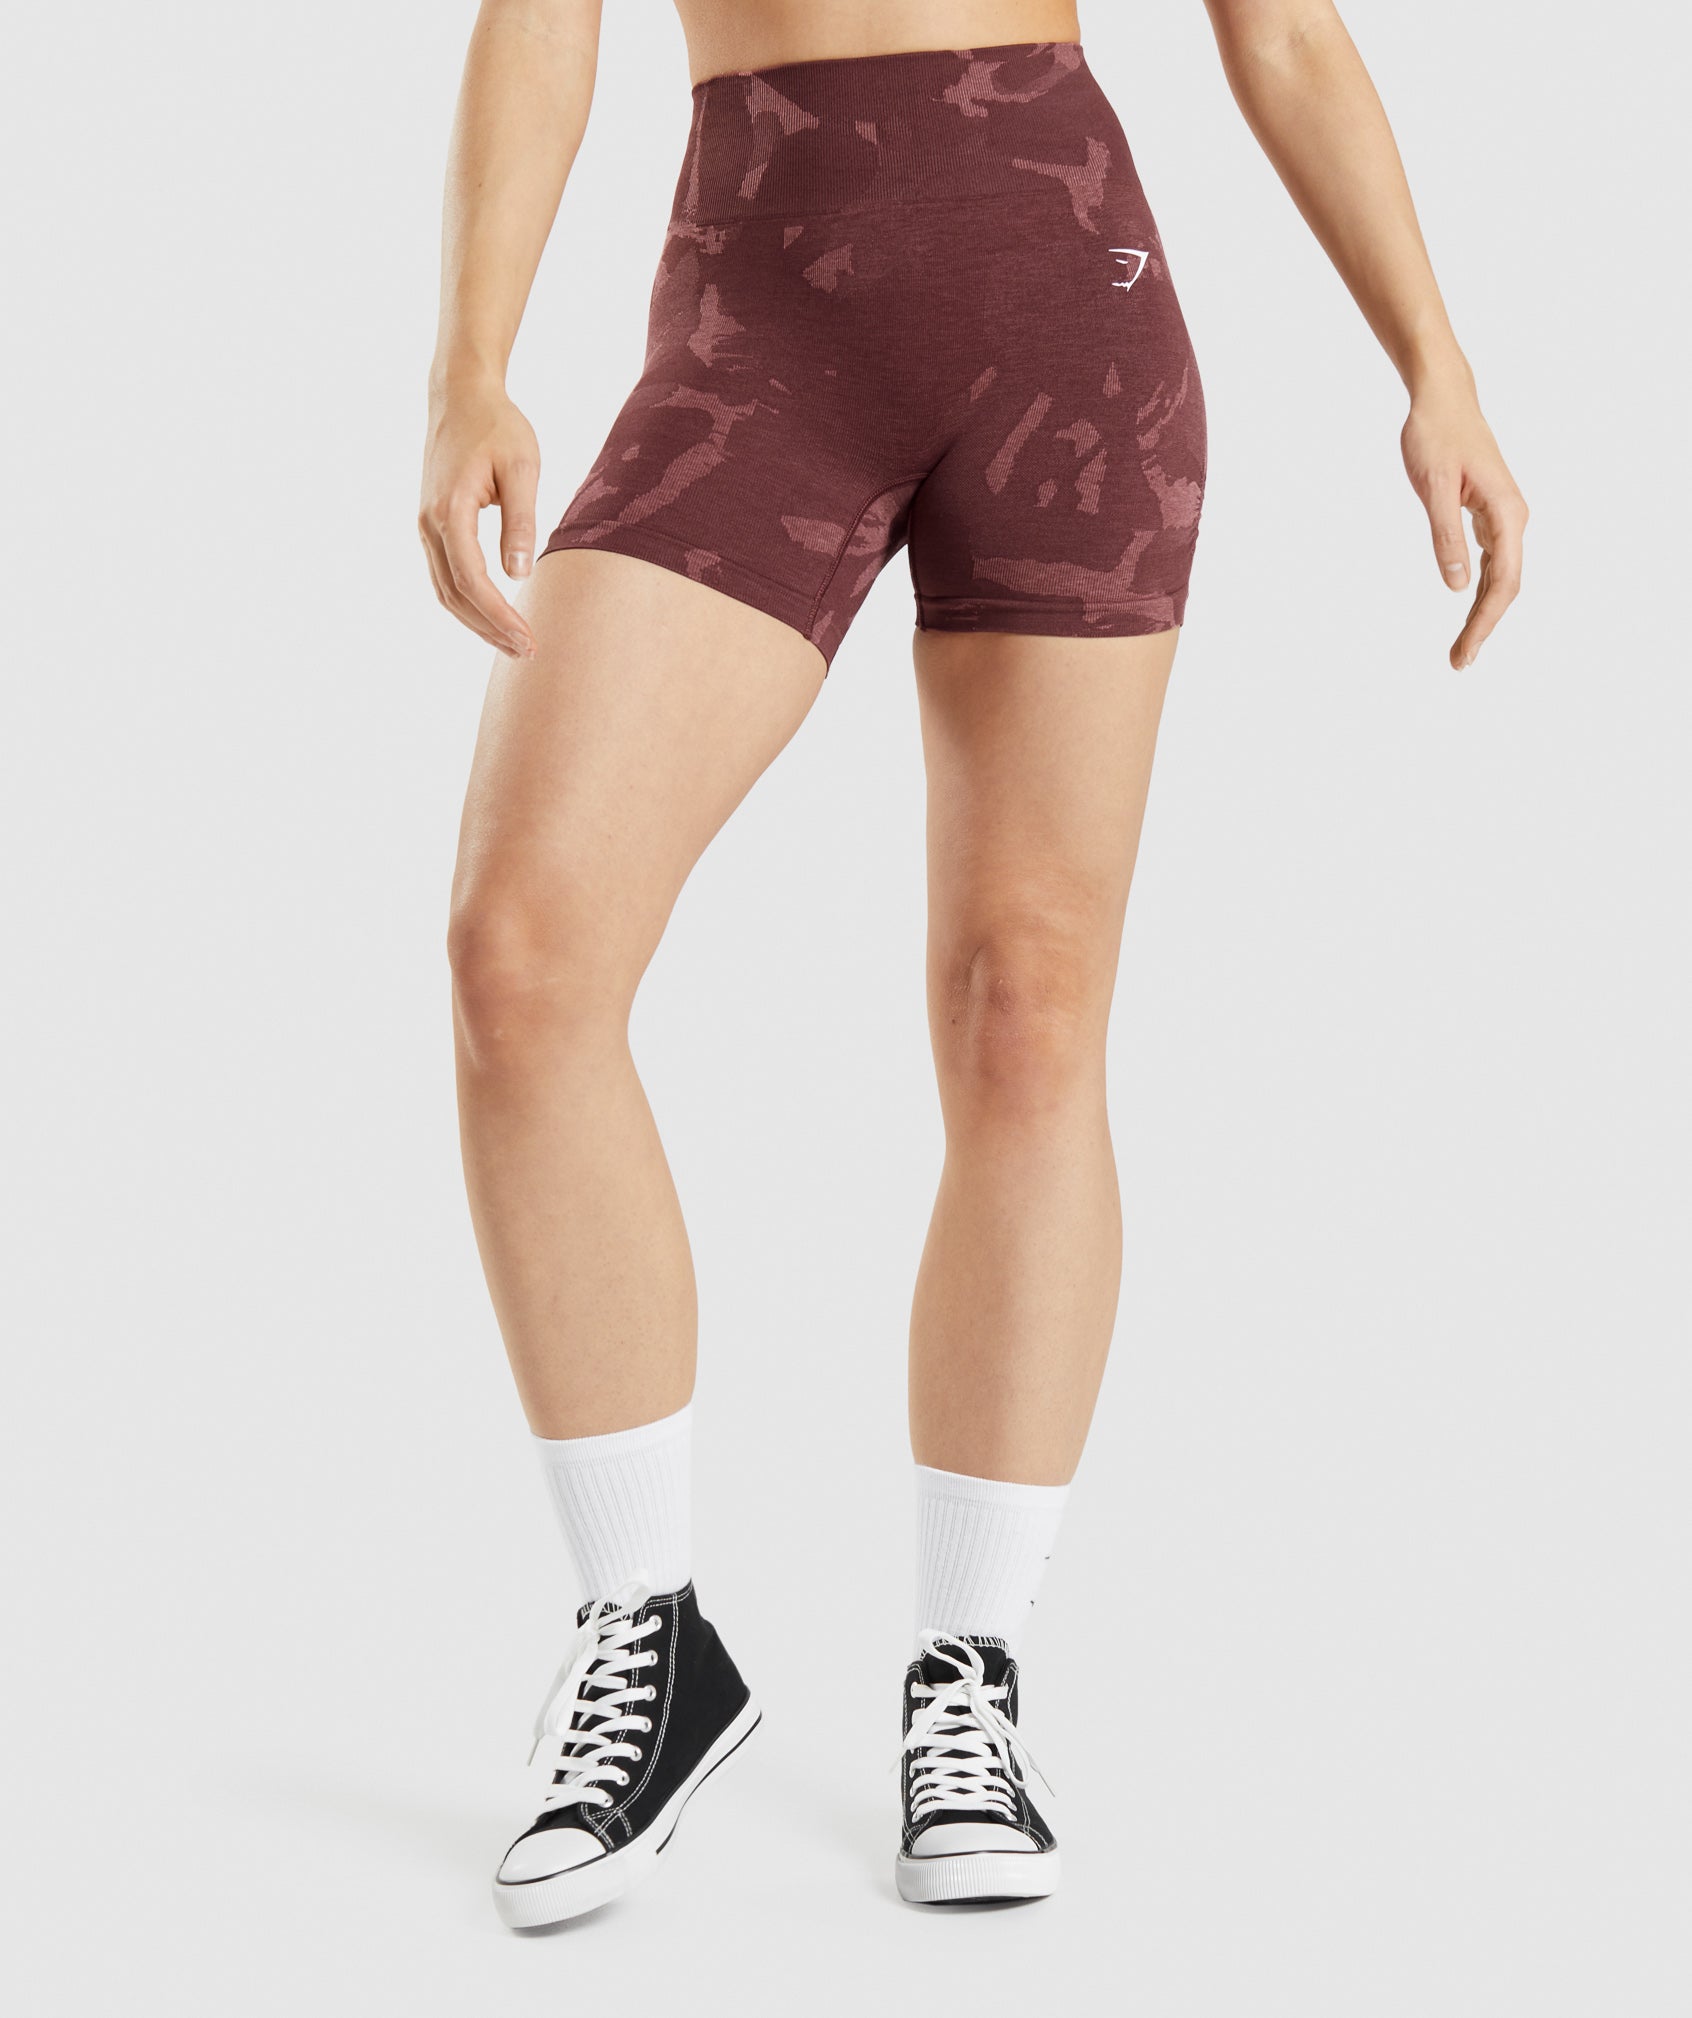 Wunderwear - Seamless Shorts fra Decoy